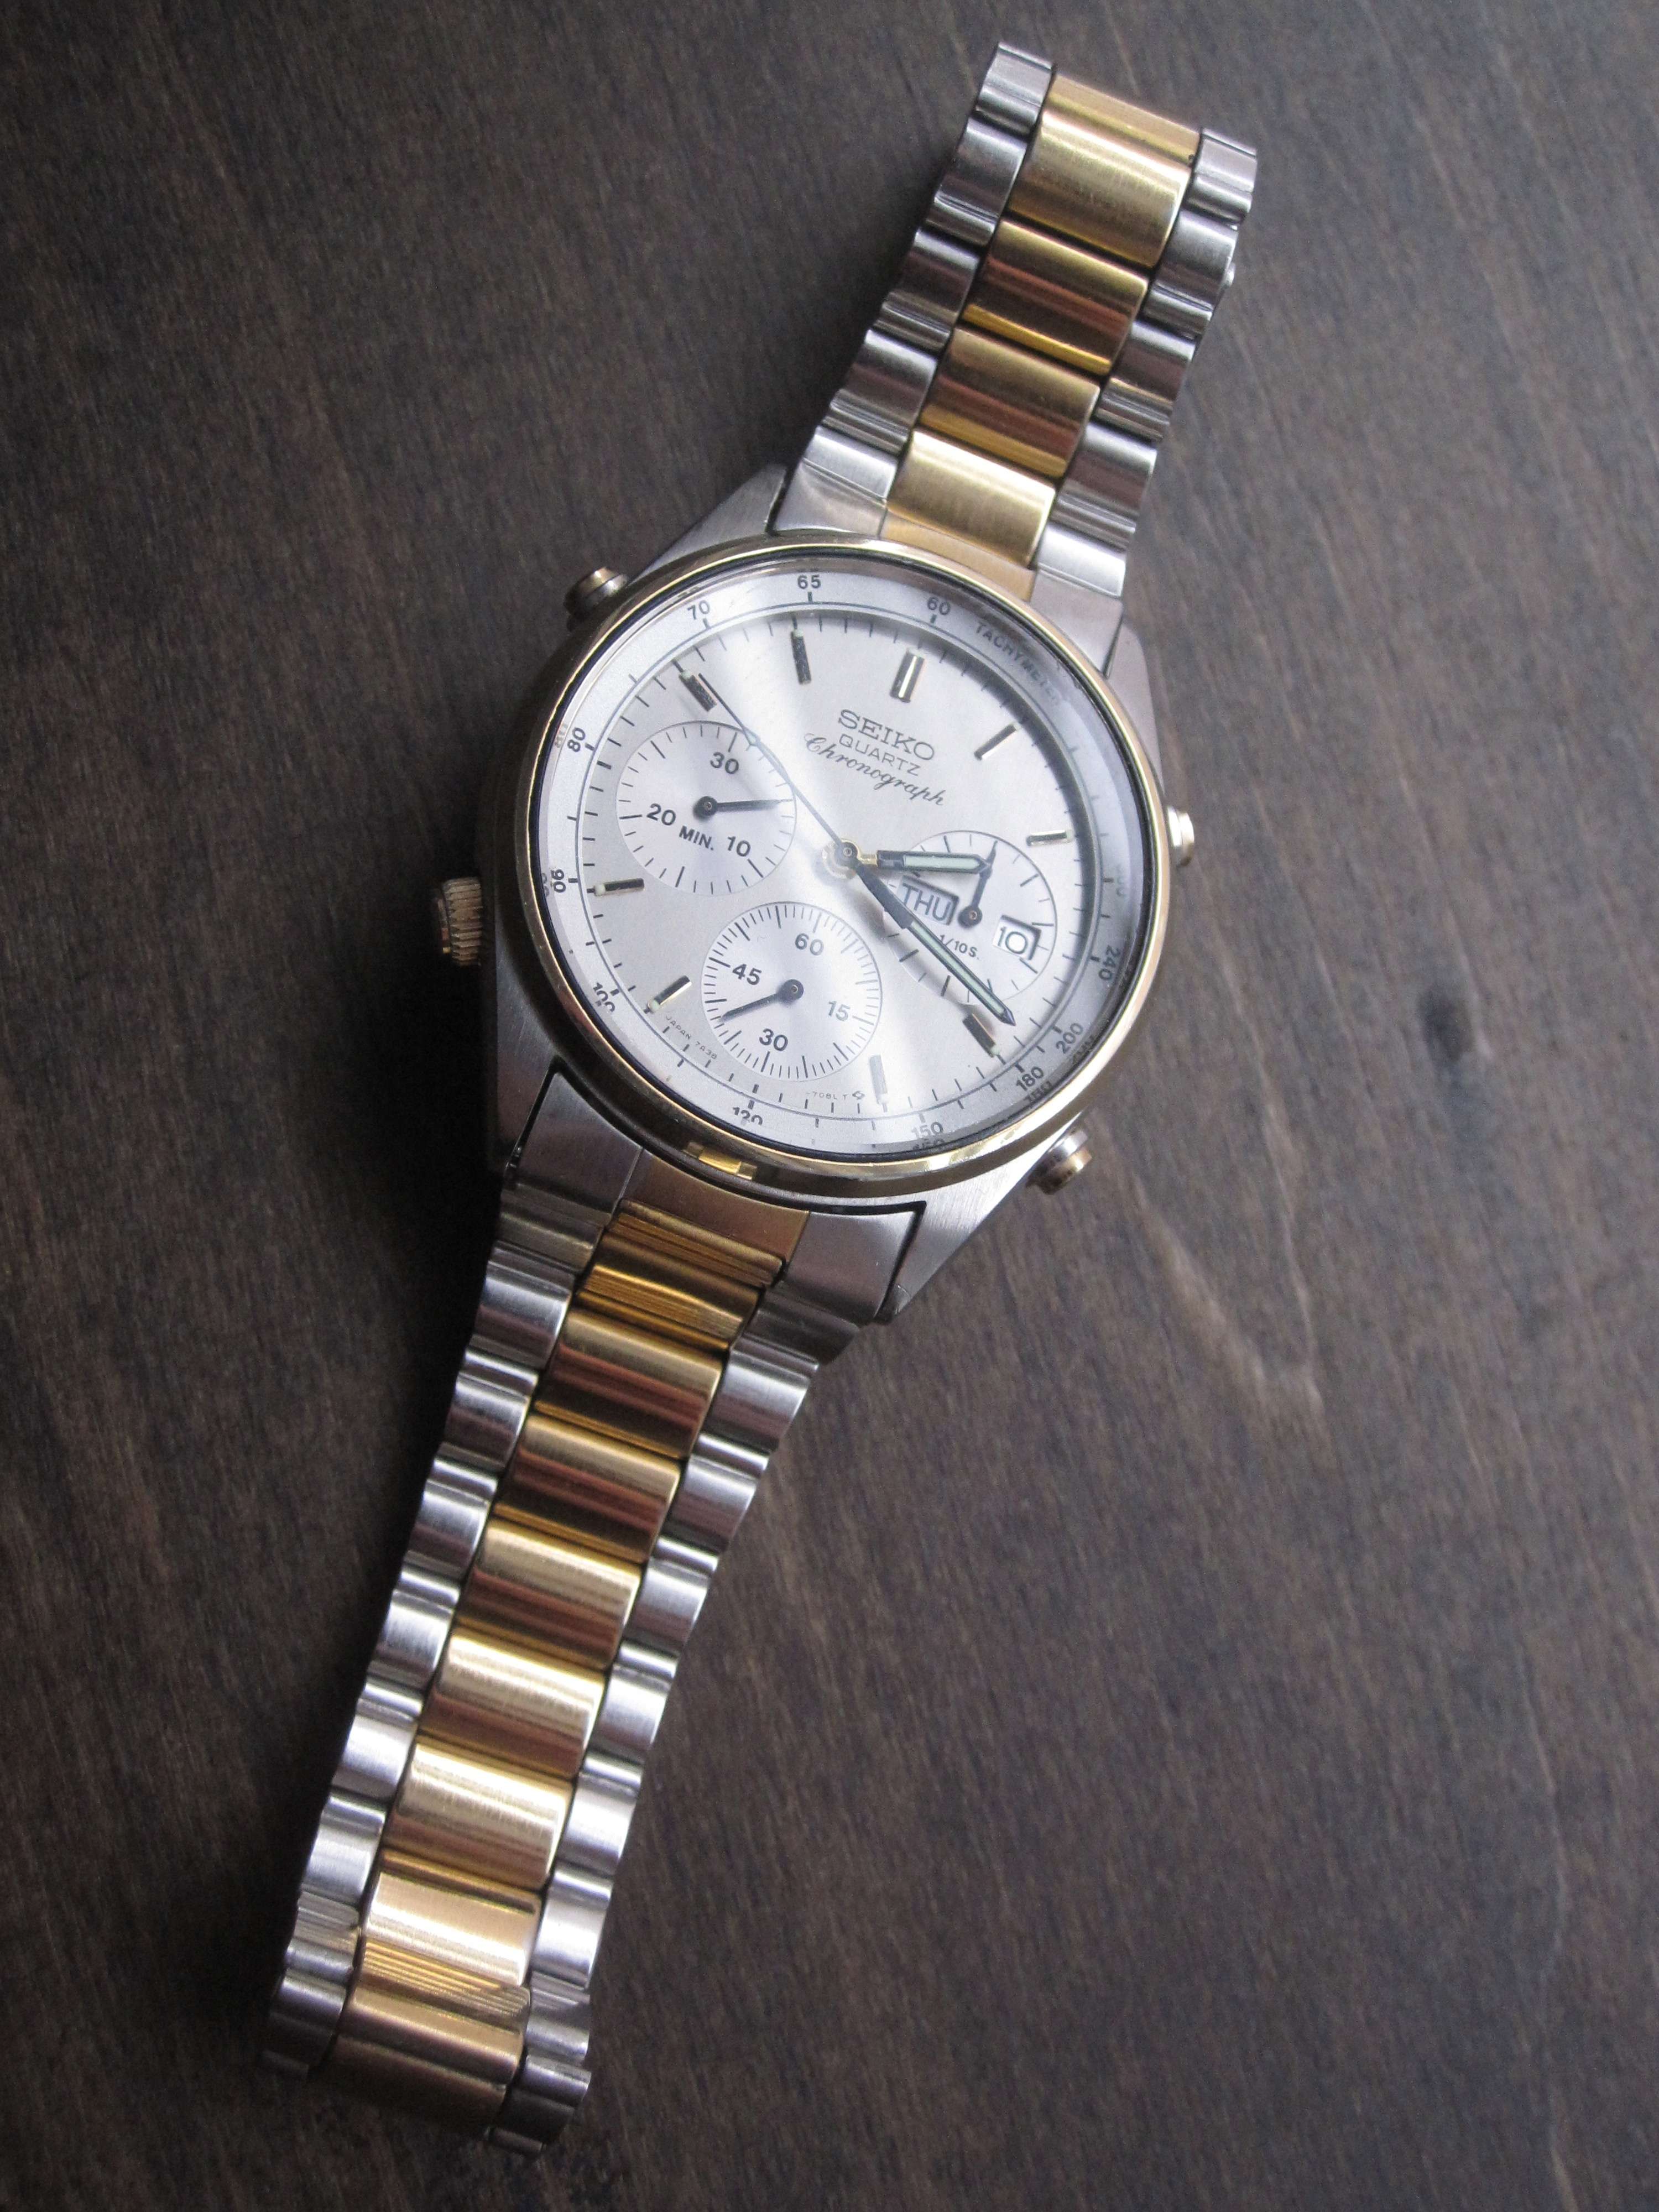 Seiko 7a38-7069 Vintage Chronograph | WatchUSeek Watch Forums